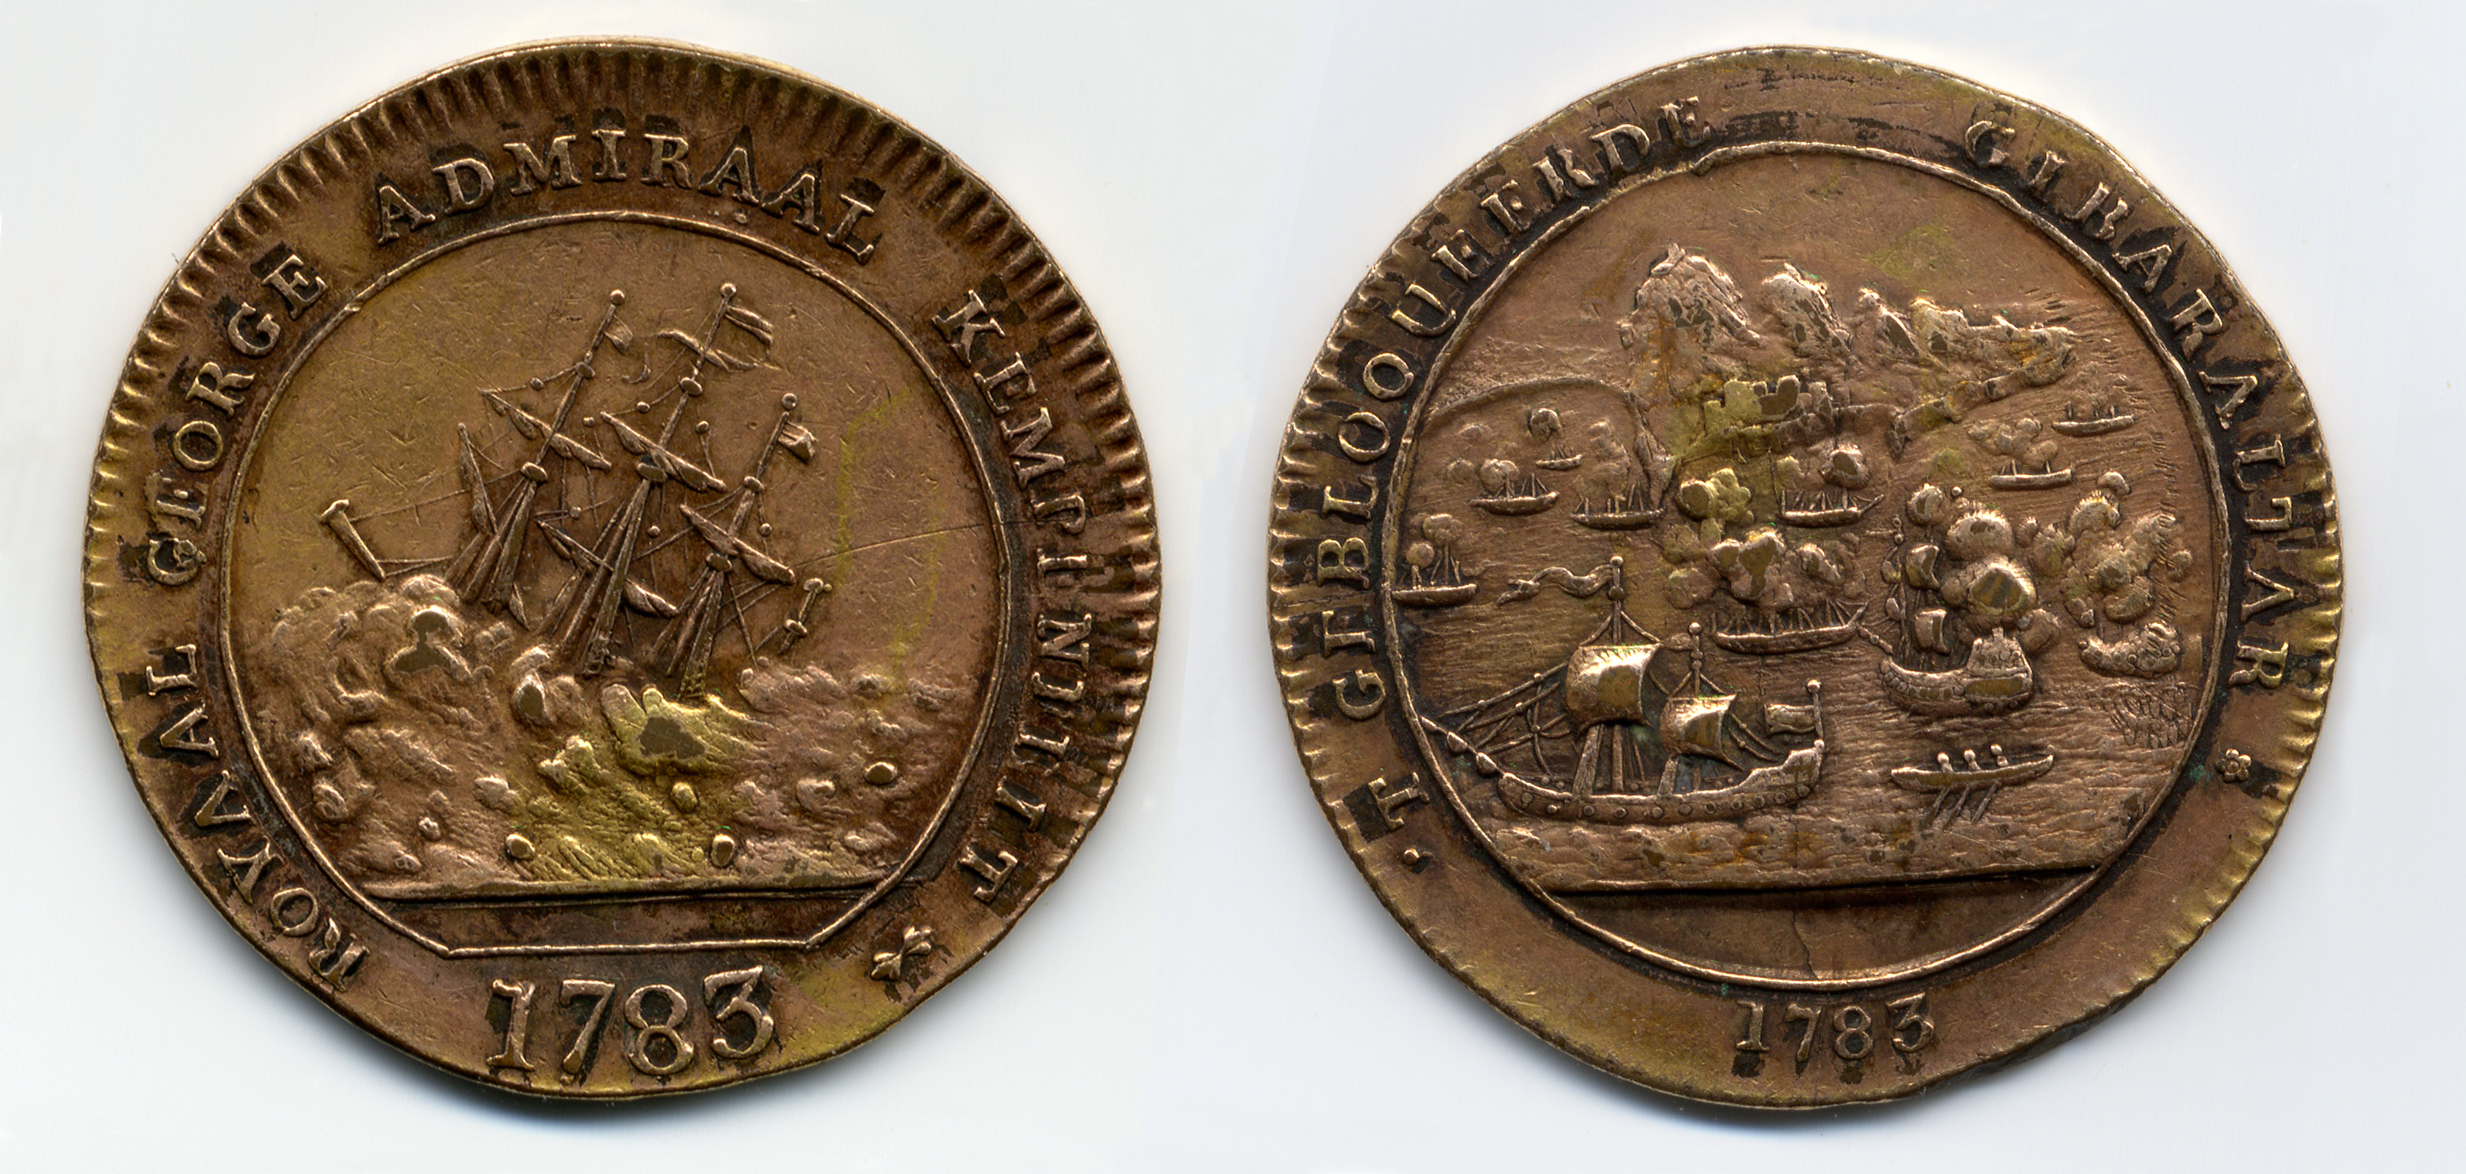 1783, Royal George medallion3